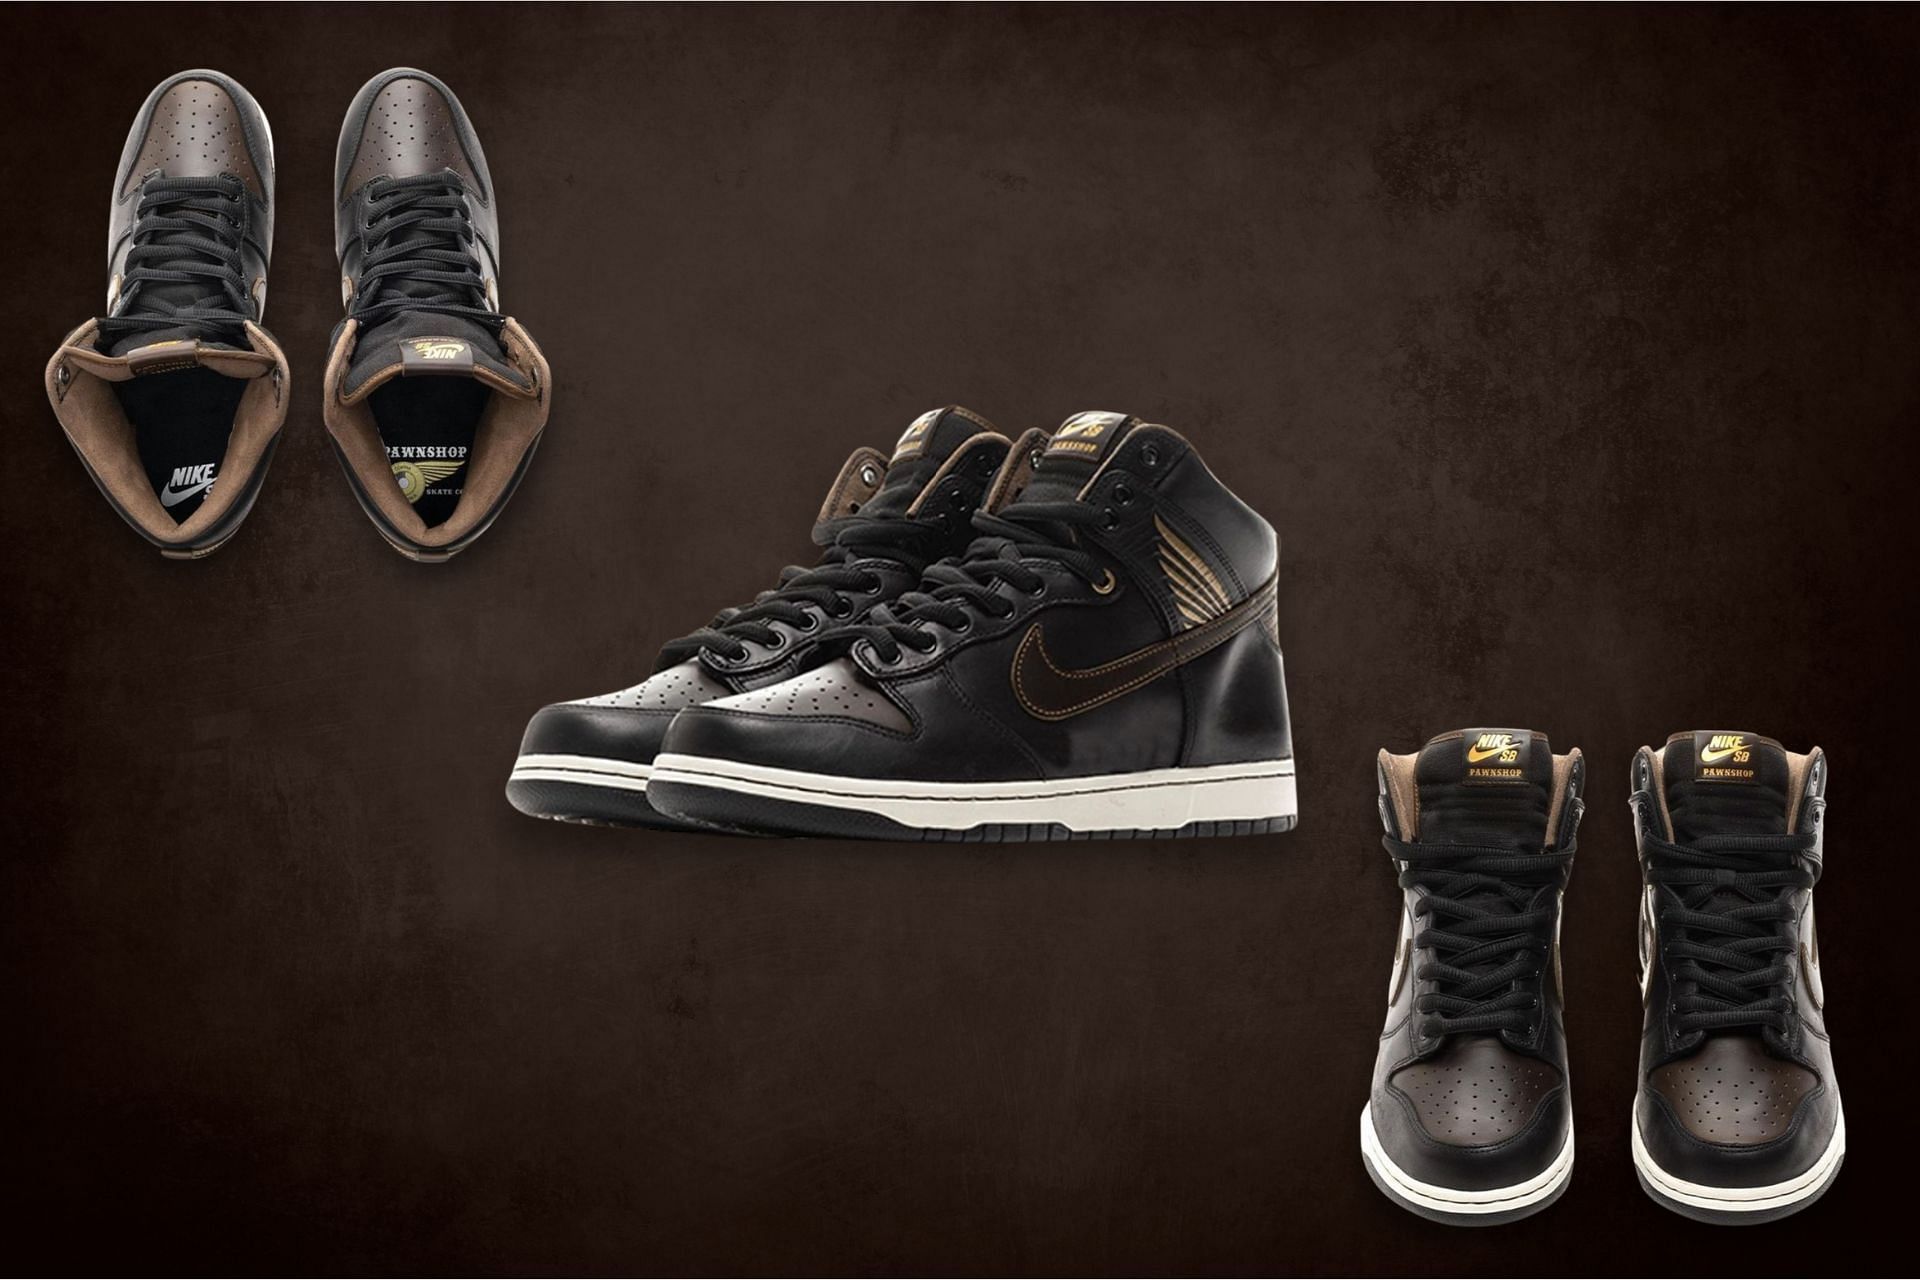 Take closer look at the Pawnshop x Nike SB Dunk High shoes (Image via Sportskeeda)